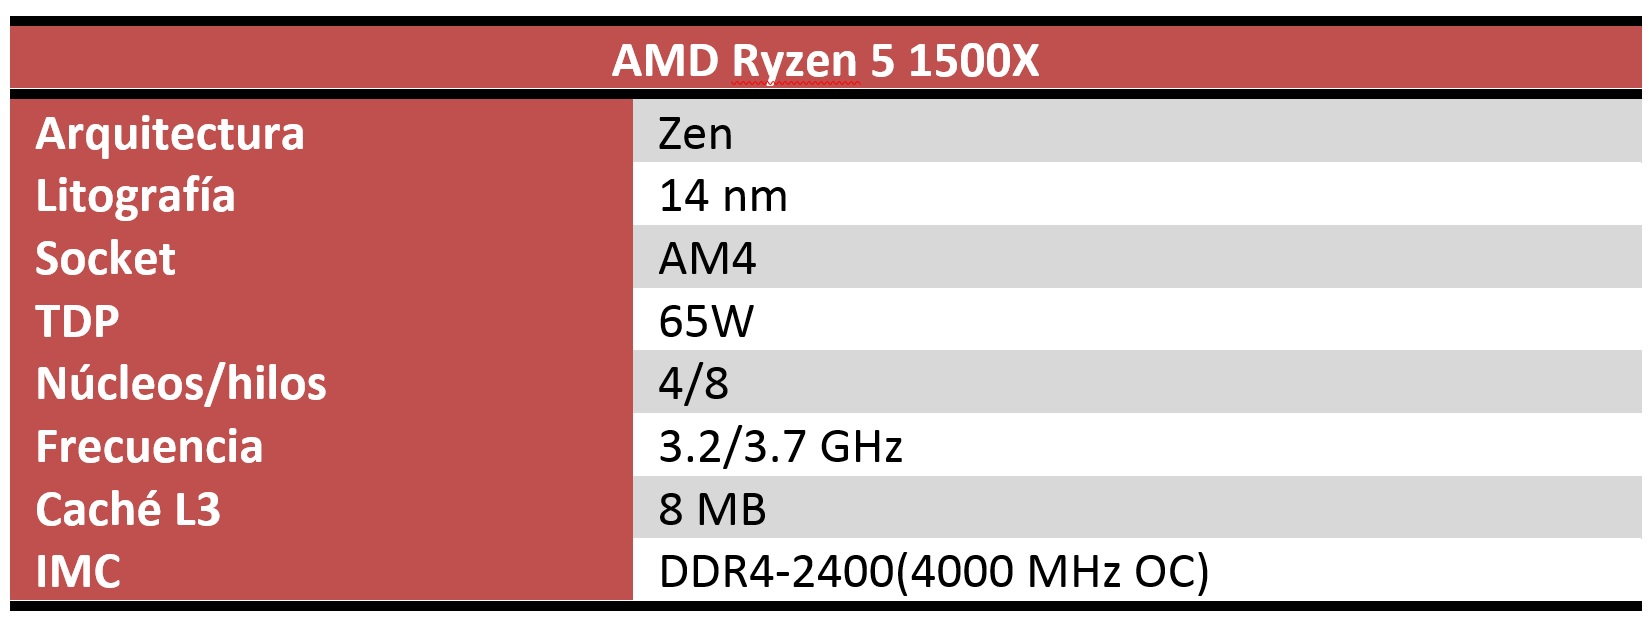 AMD Ryzen 5 1500X caracteristicas